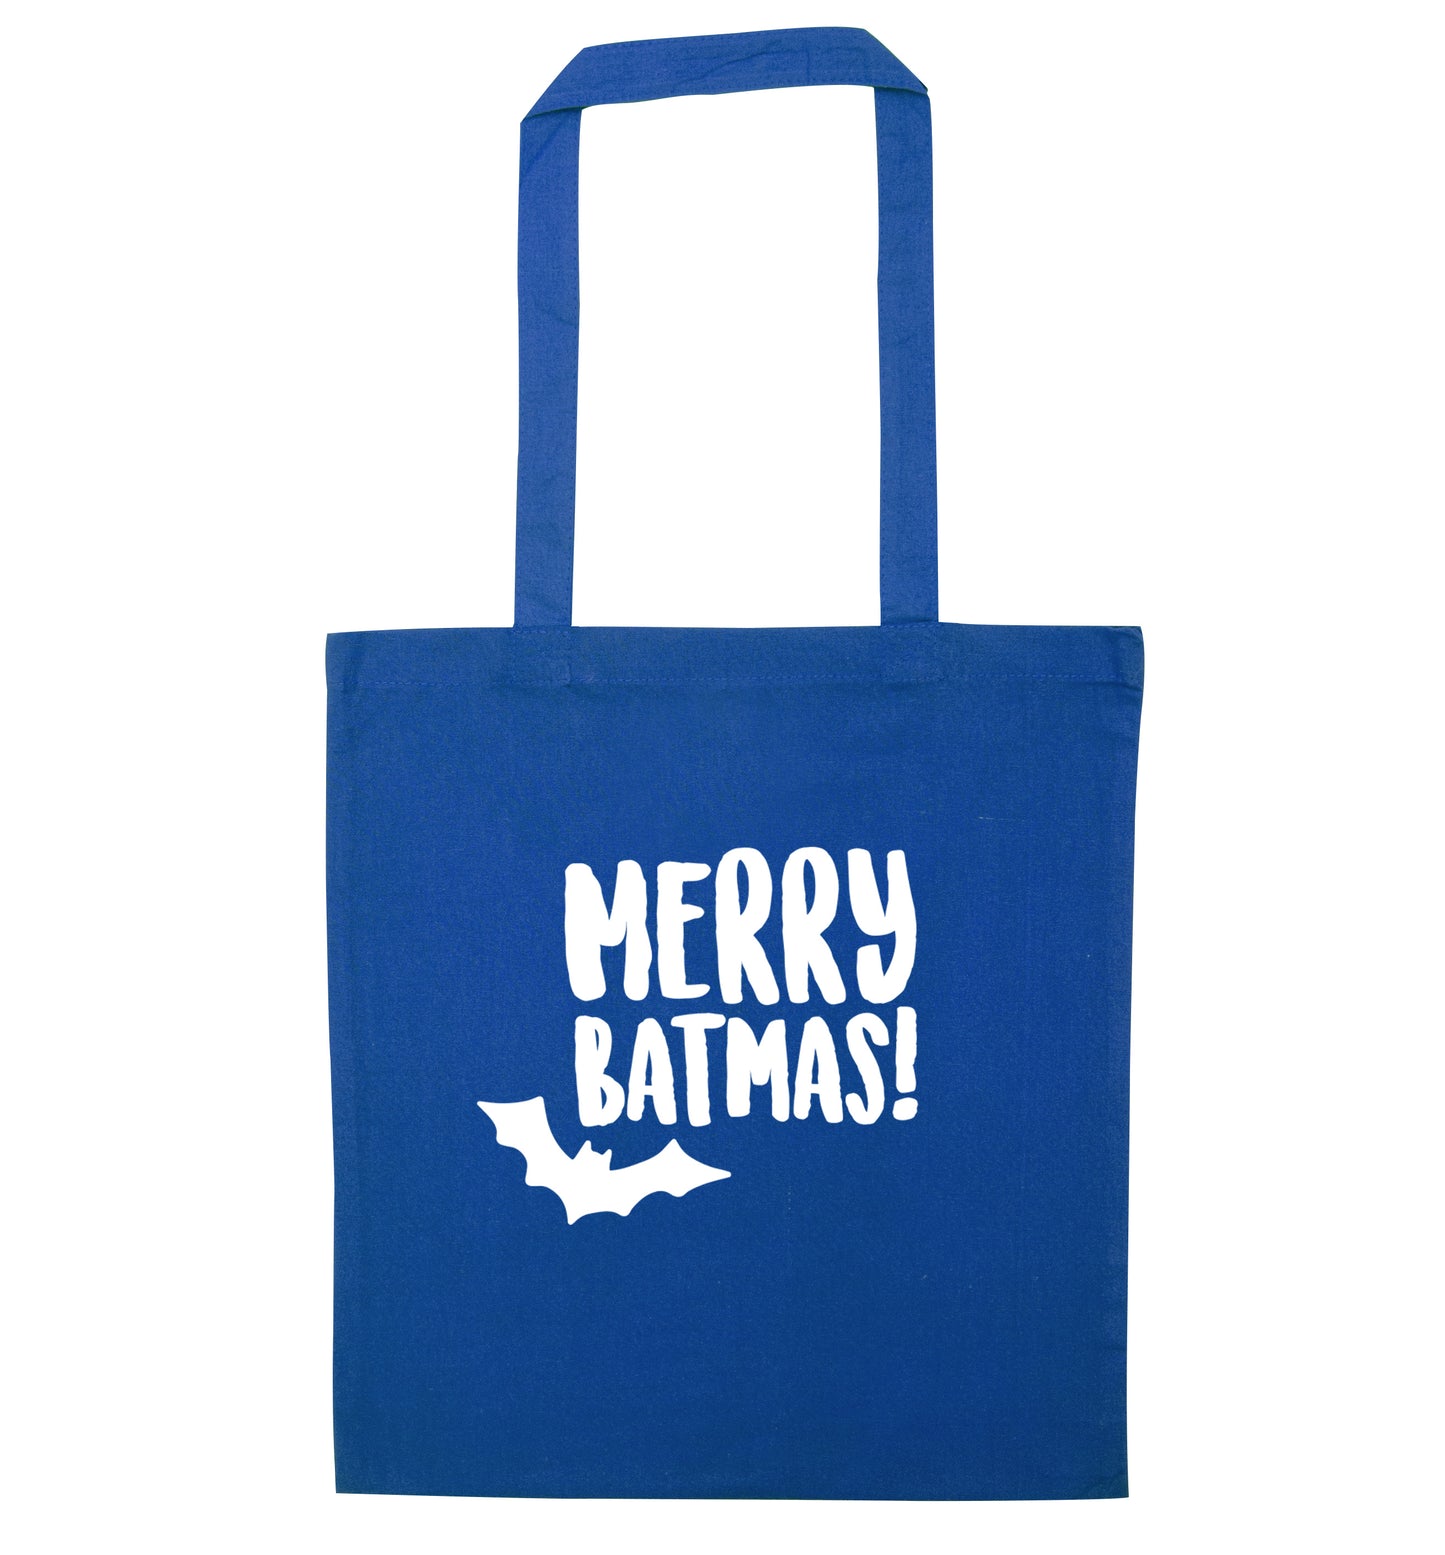 Merry Batmas blue tote bag